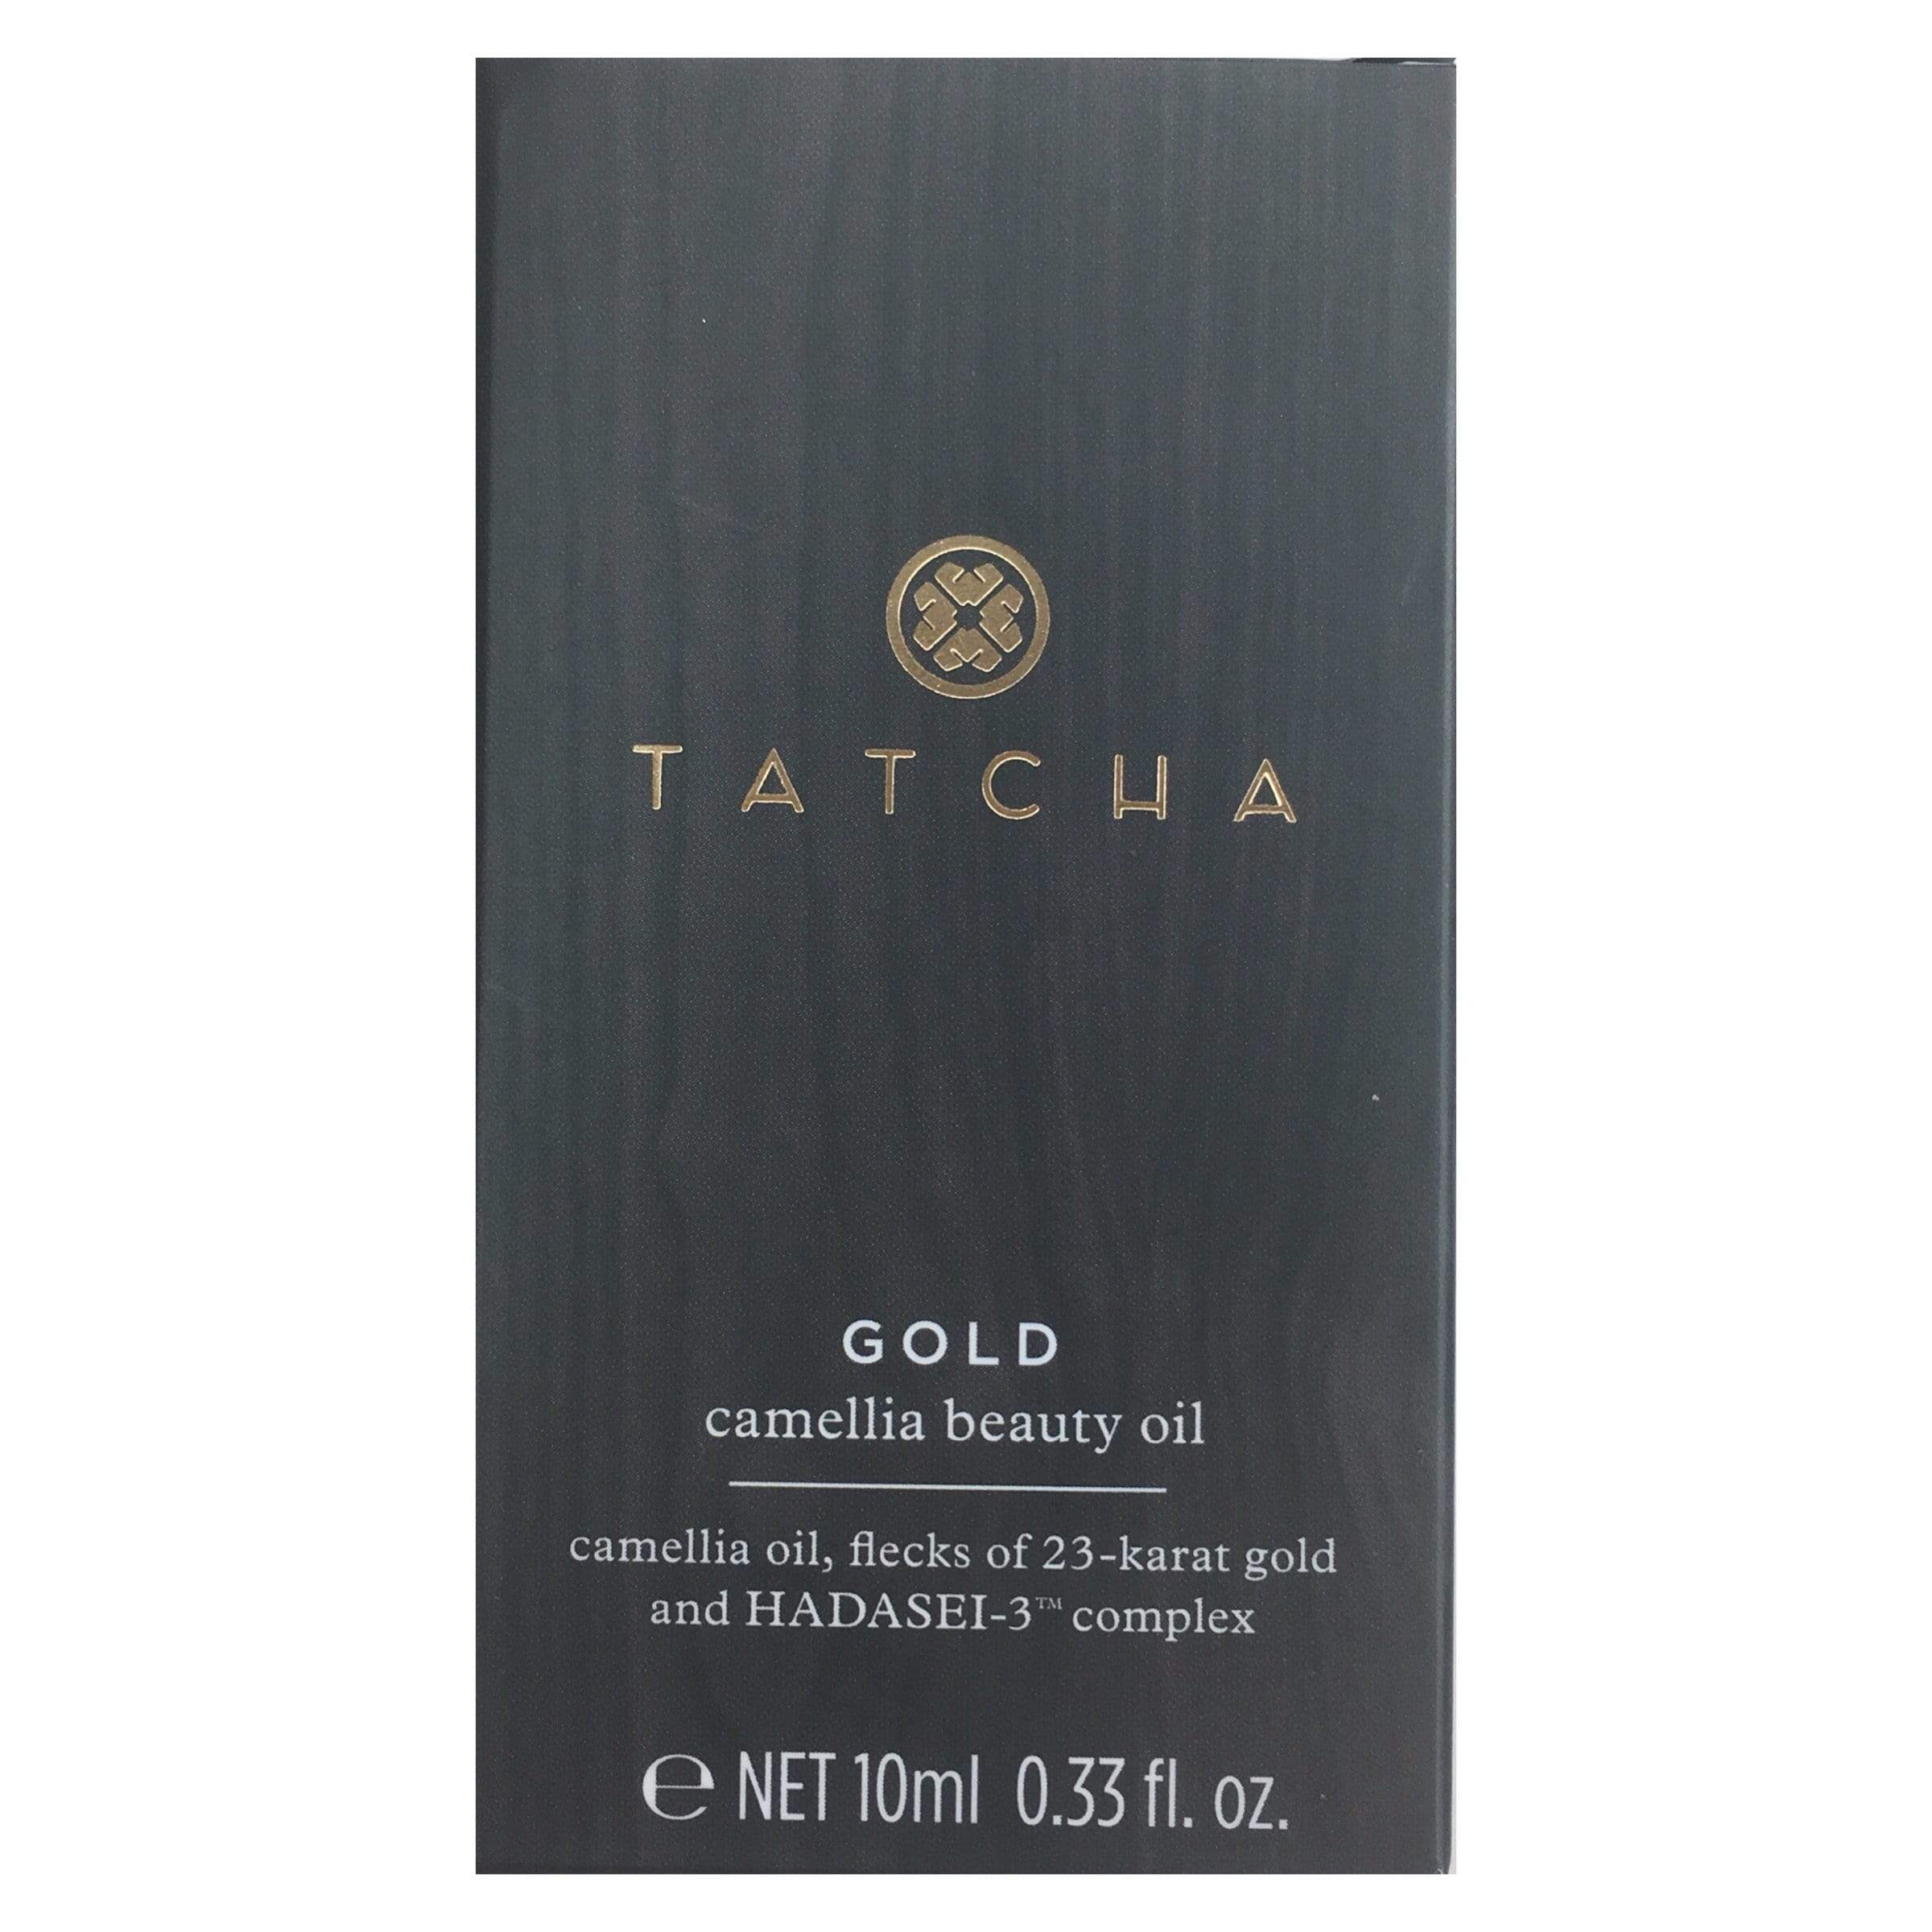 Tatcha Gold Camellia Beauty Oil Travel Size, 10 ml / 0.33 fl. oz., Skin Care, London Loves Beauty